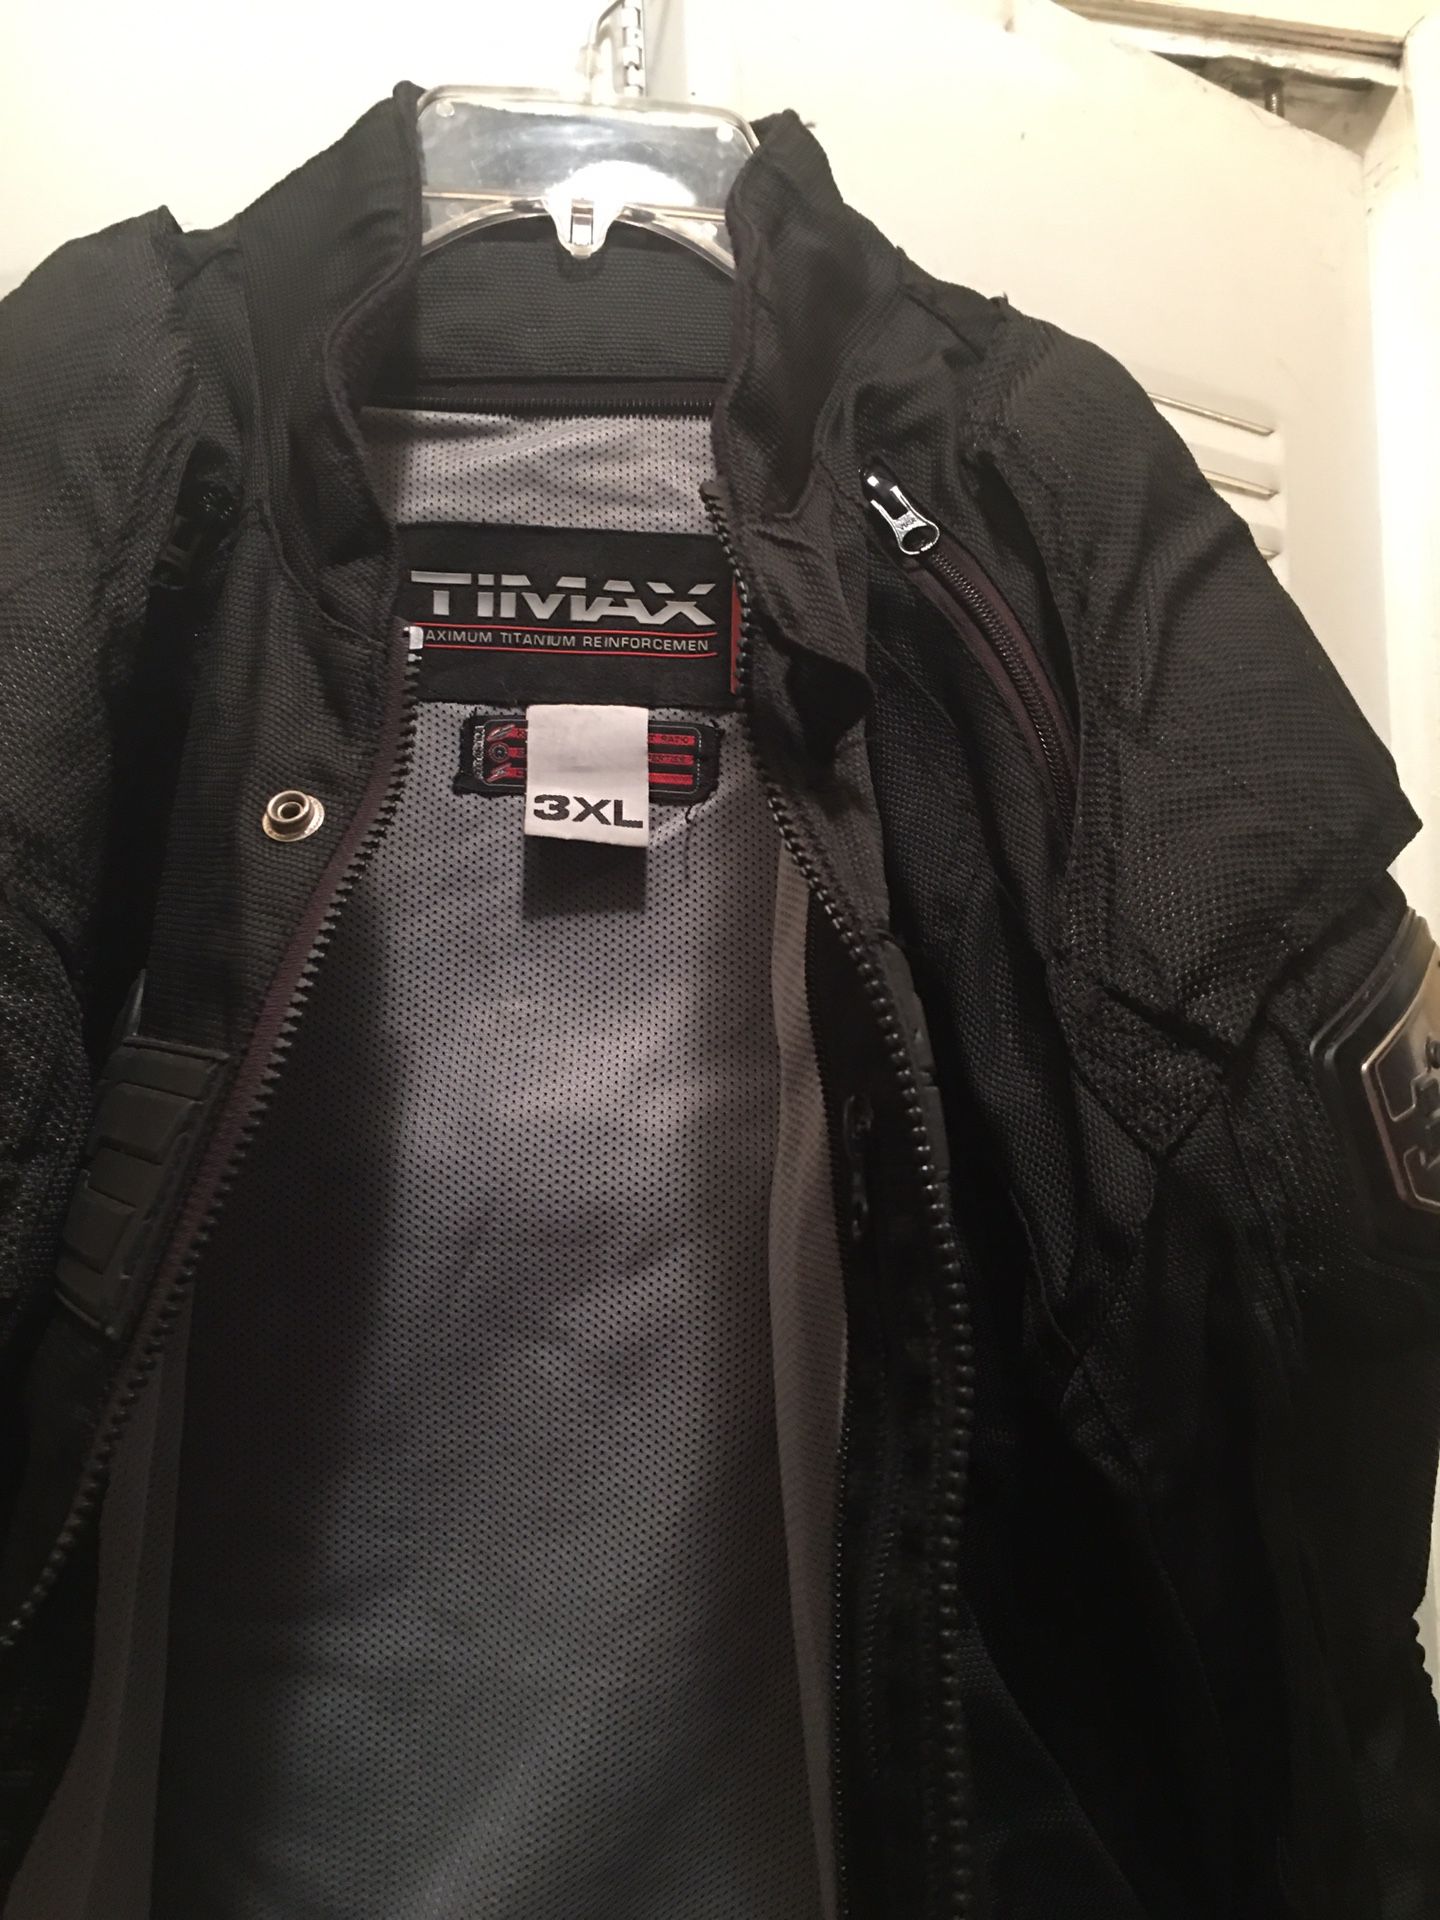 Motorcycle jacket 3xxl, tmax.